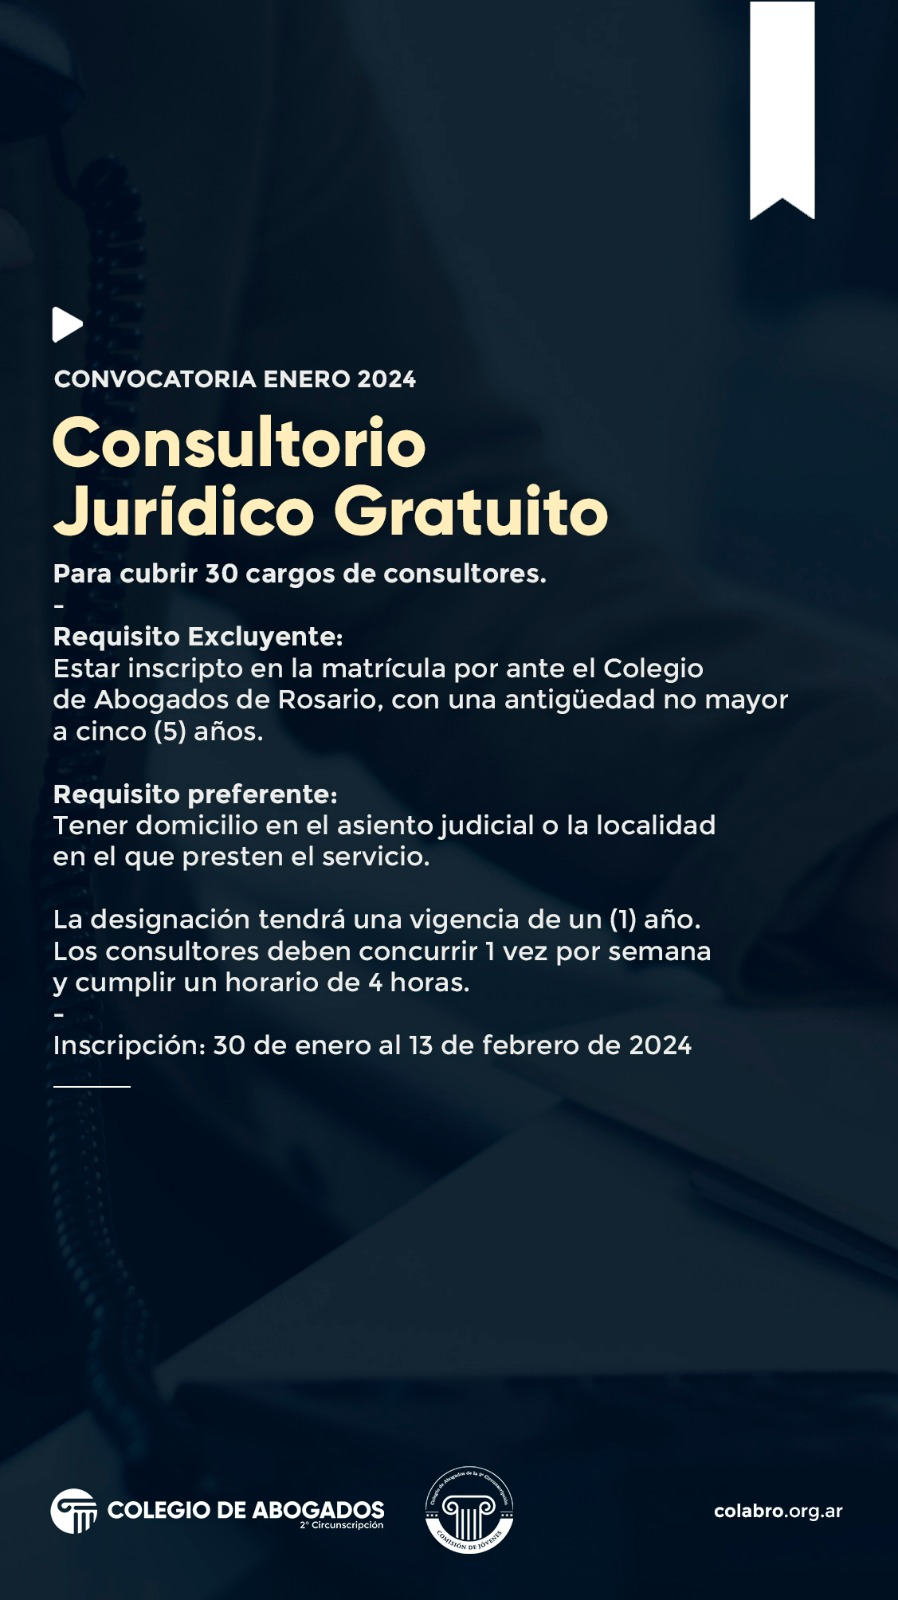 CONSULTORIO JURÍDICO GRATUITO - Convocatoria enero 2024